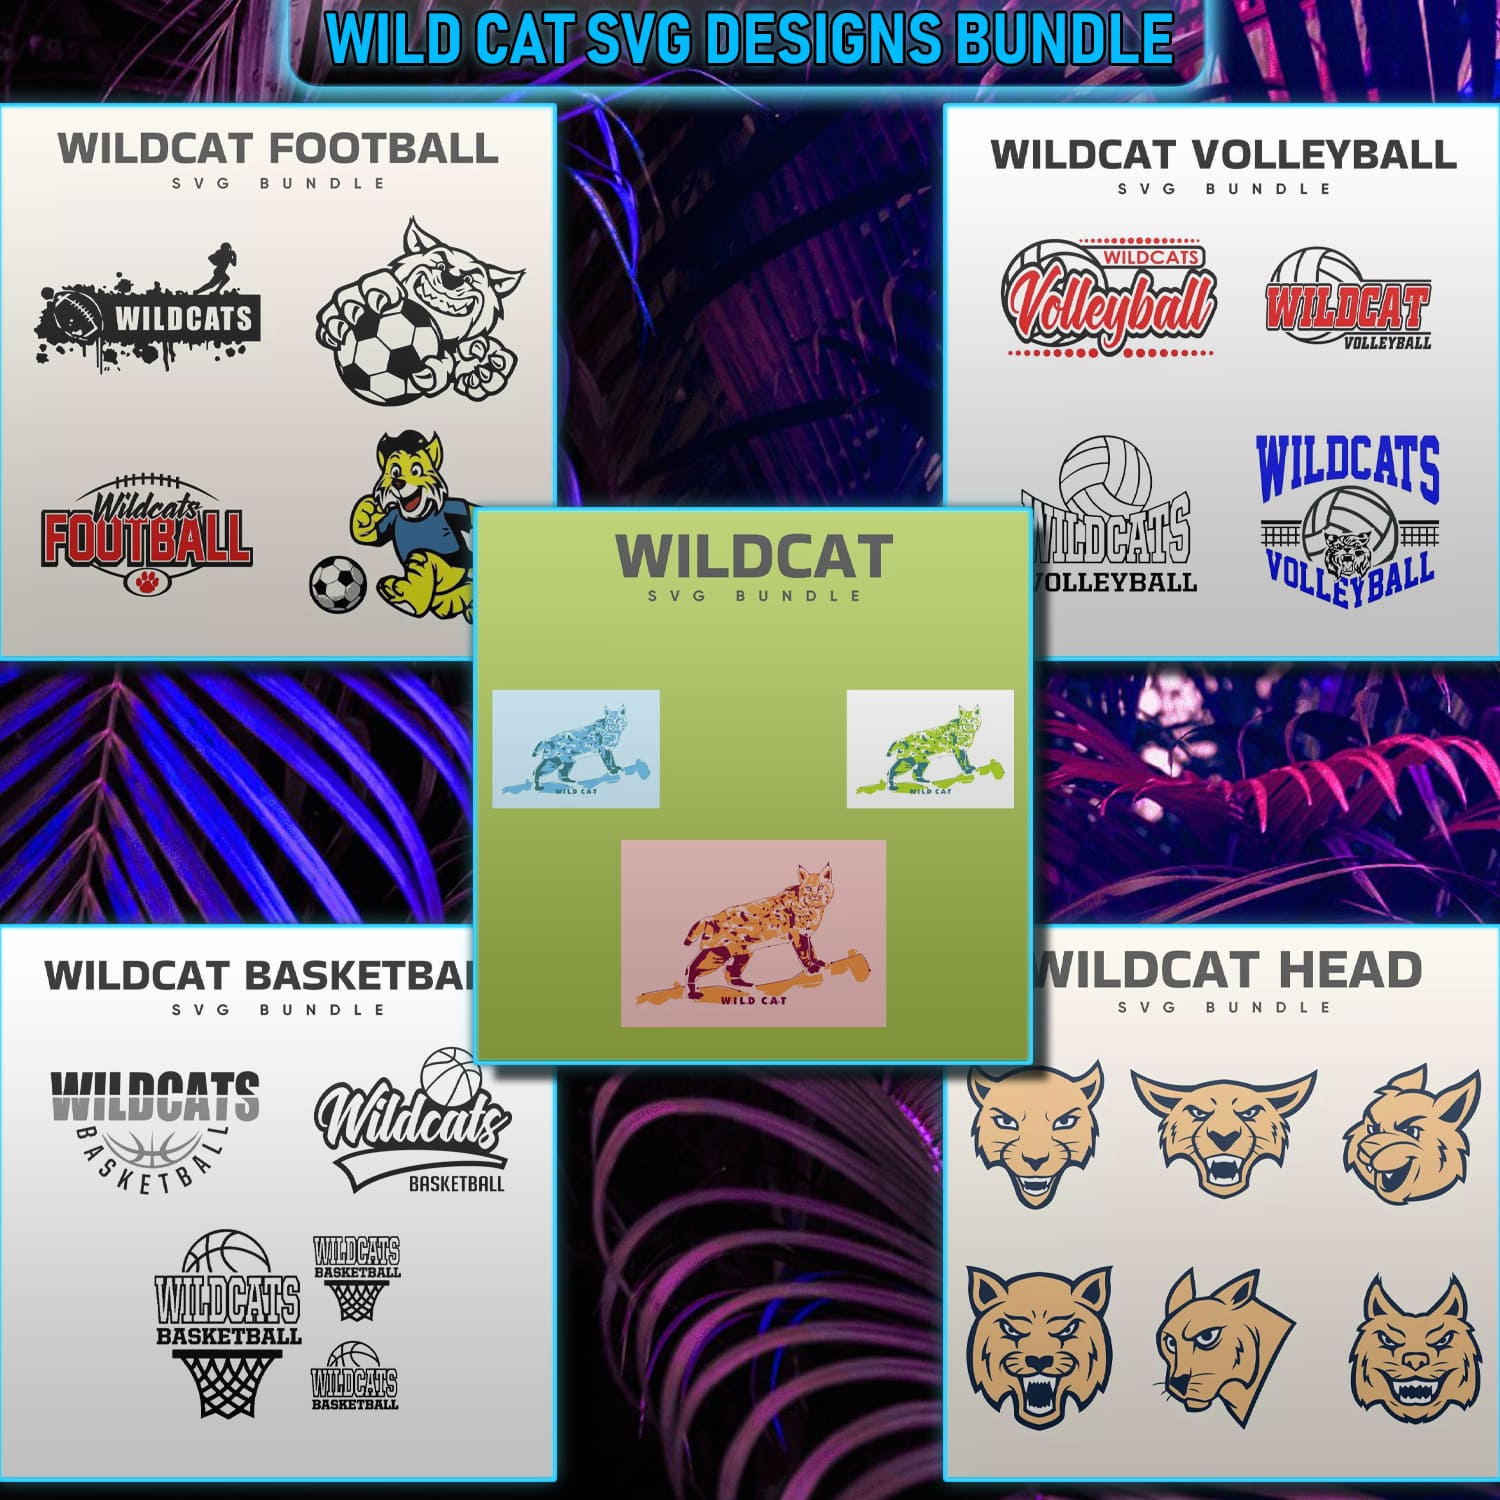 Wild cat designs bundle.